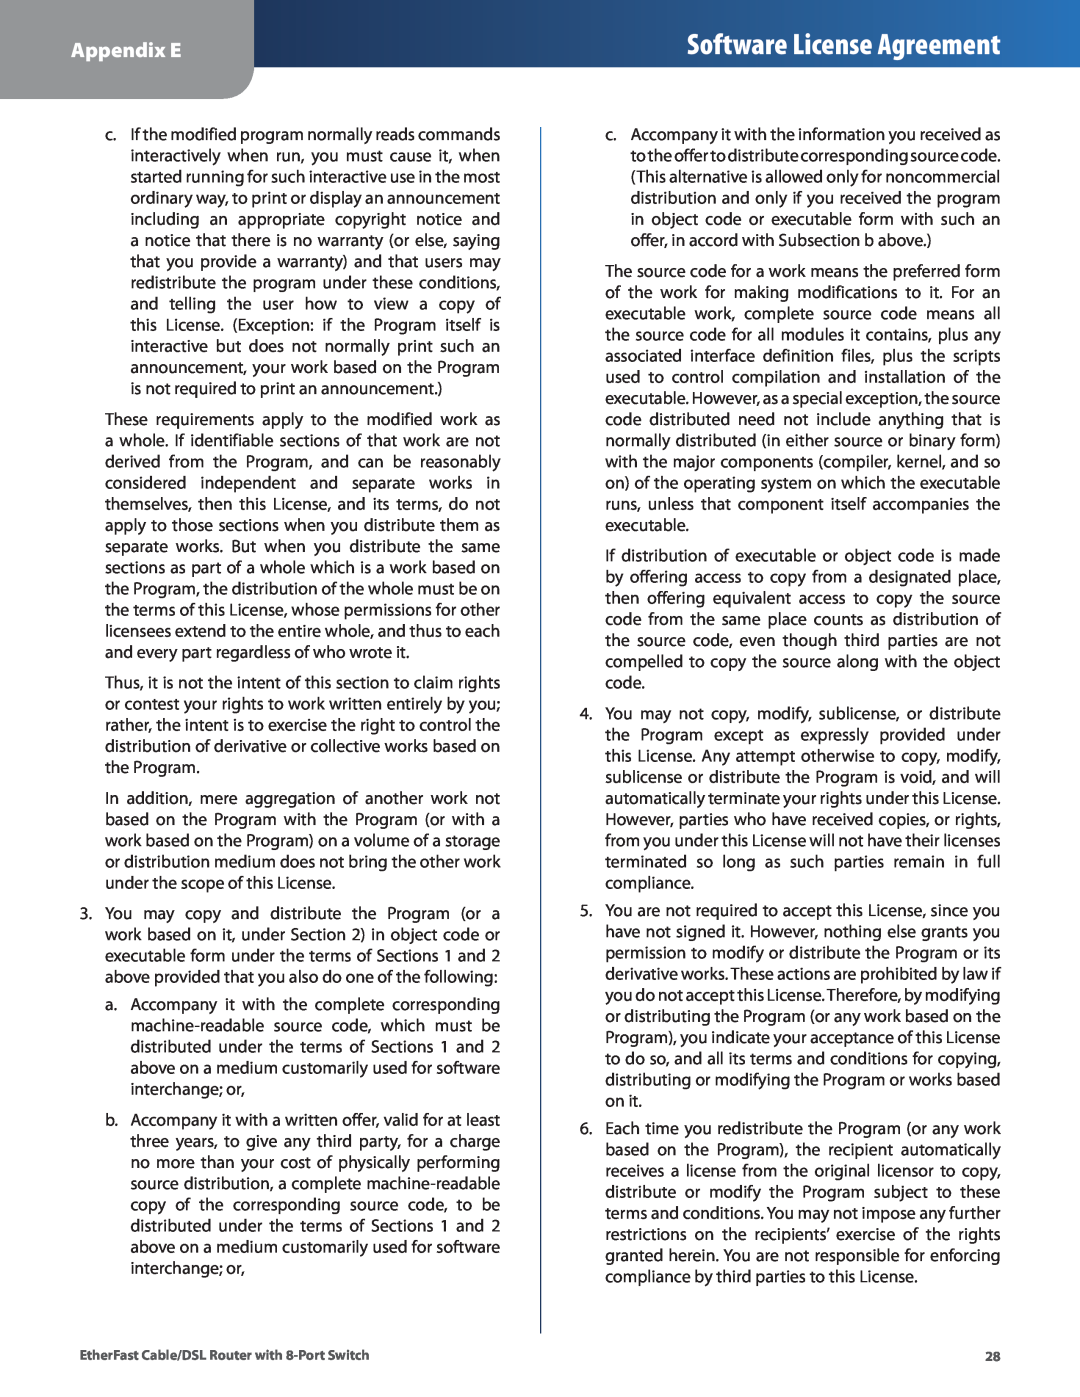 Cisco Systems BEFSR81 manual Software License Agreement, Appendix E 